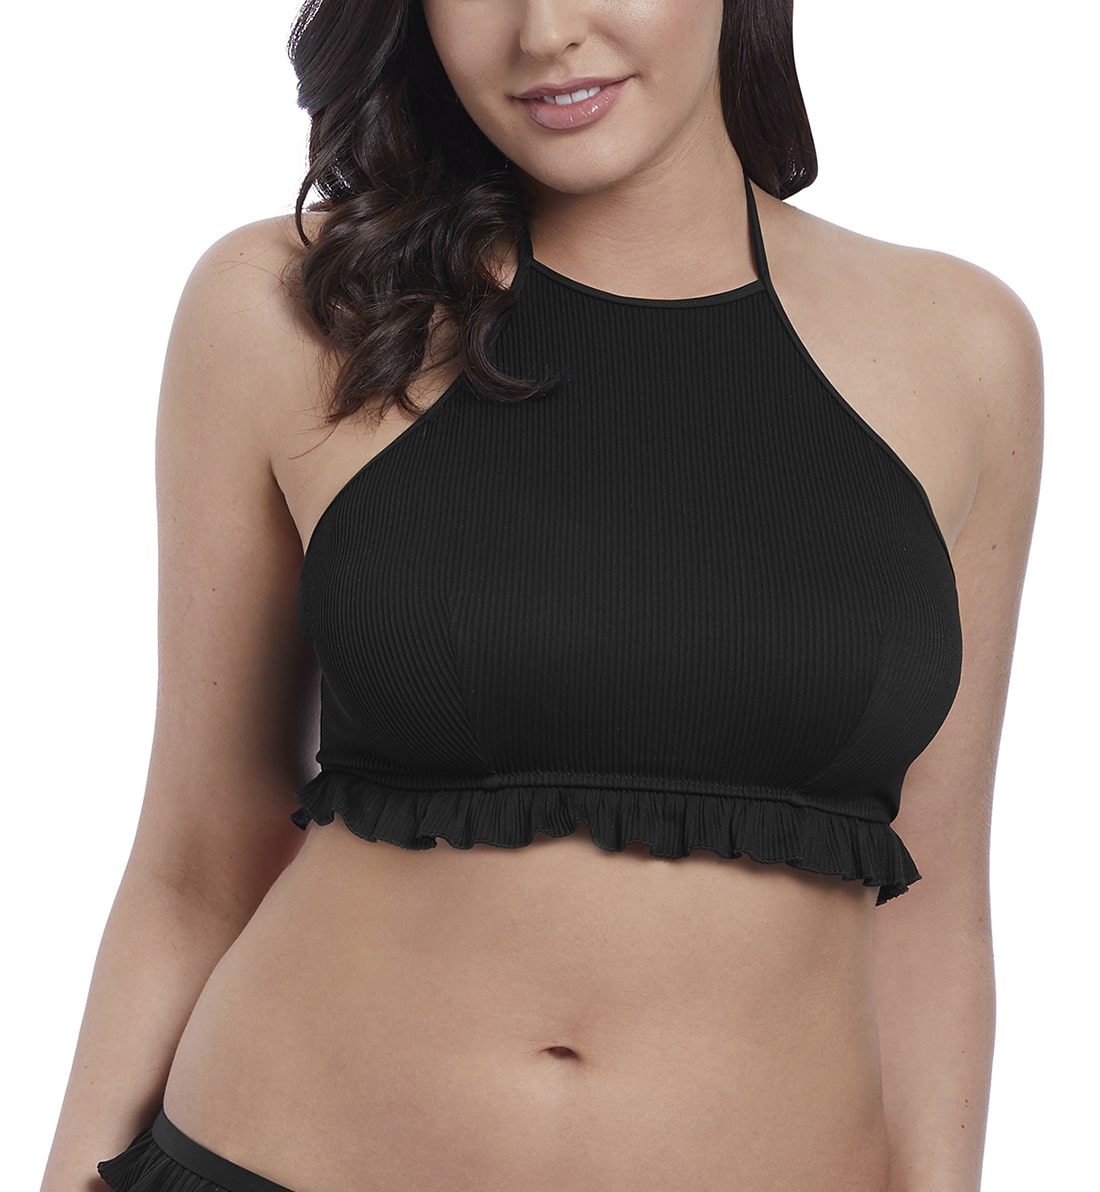 Freya Nouveau Padded Hi-Neck Crop Top Underwire Bikini (6702),28E,Black - Black,28E